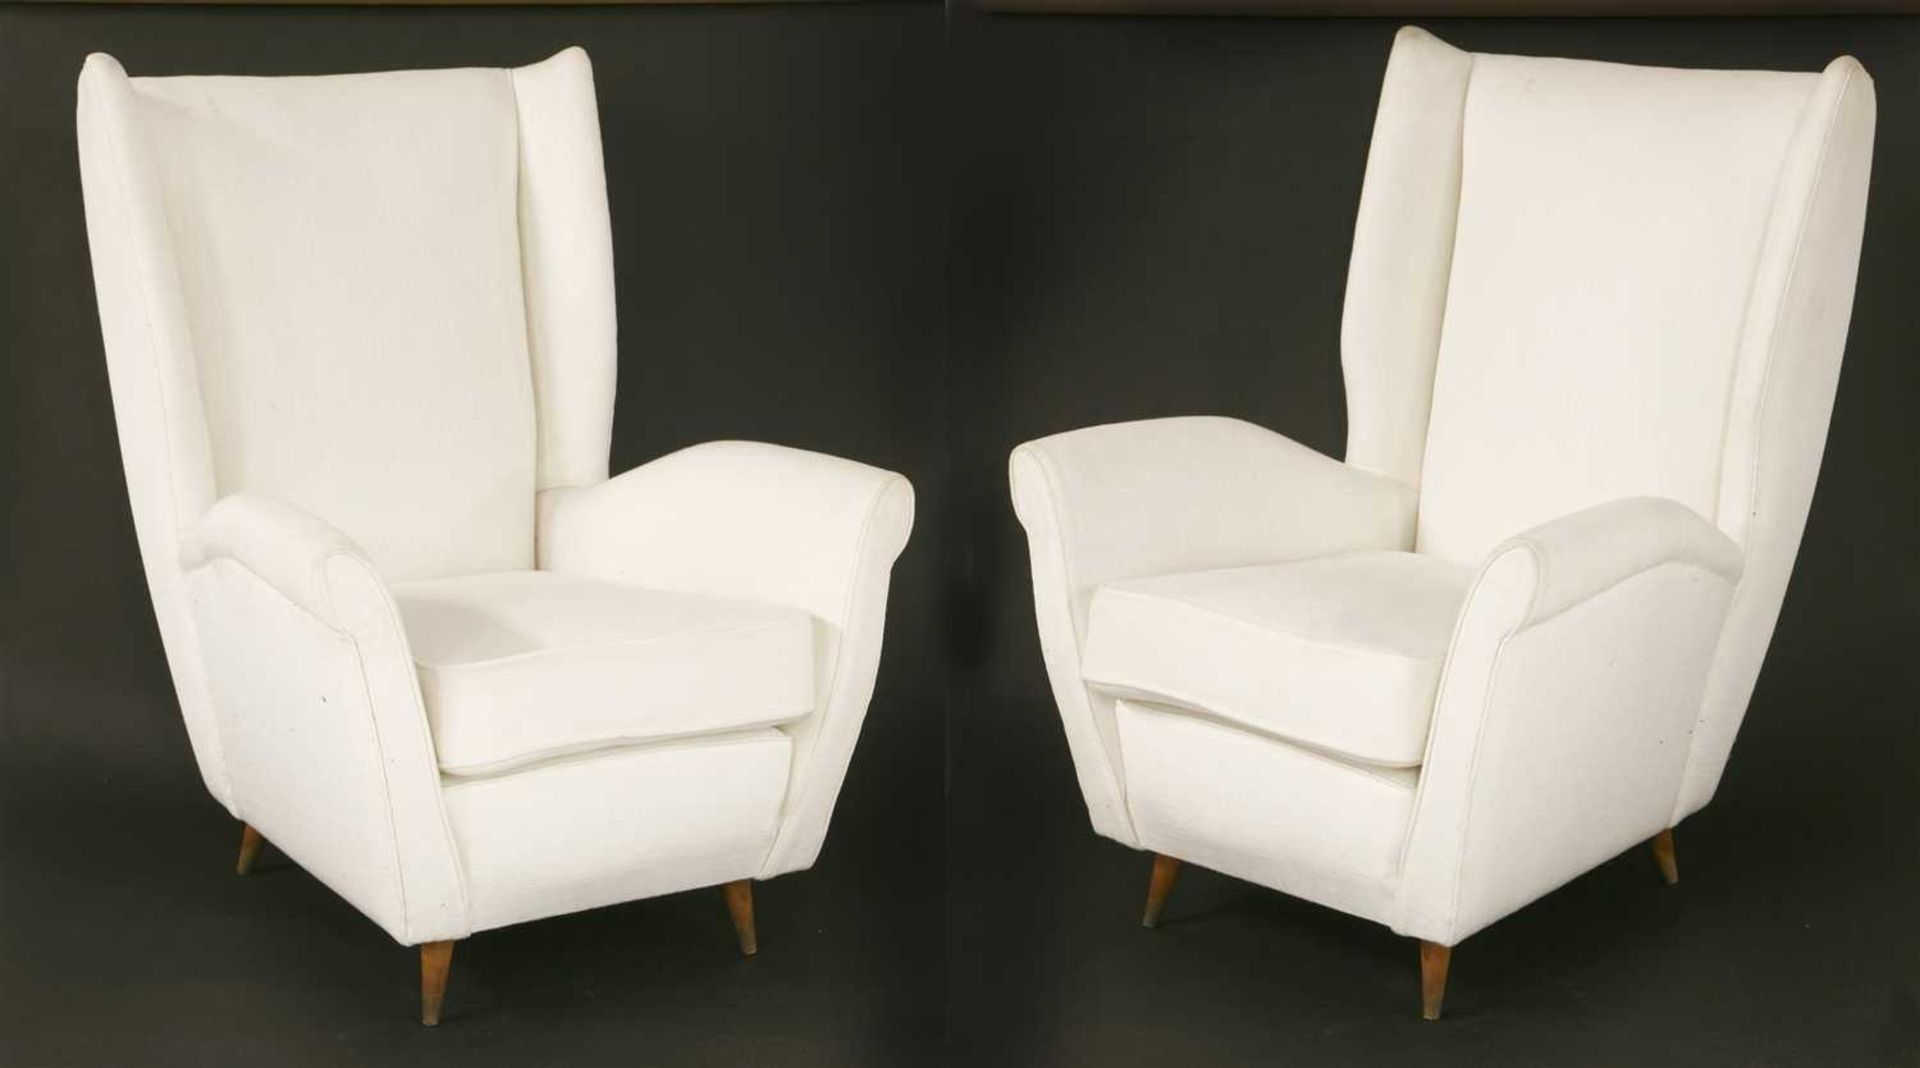 A pair of Italian armchairs